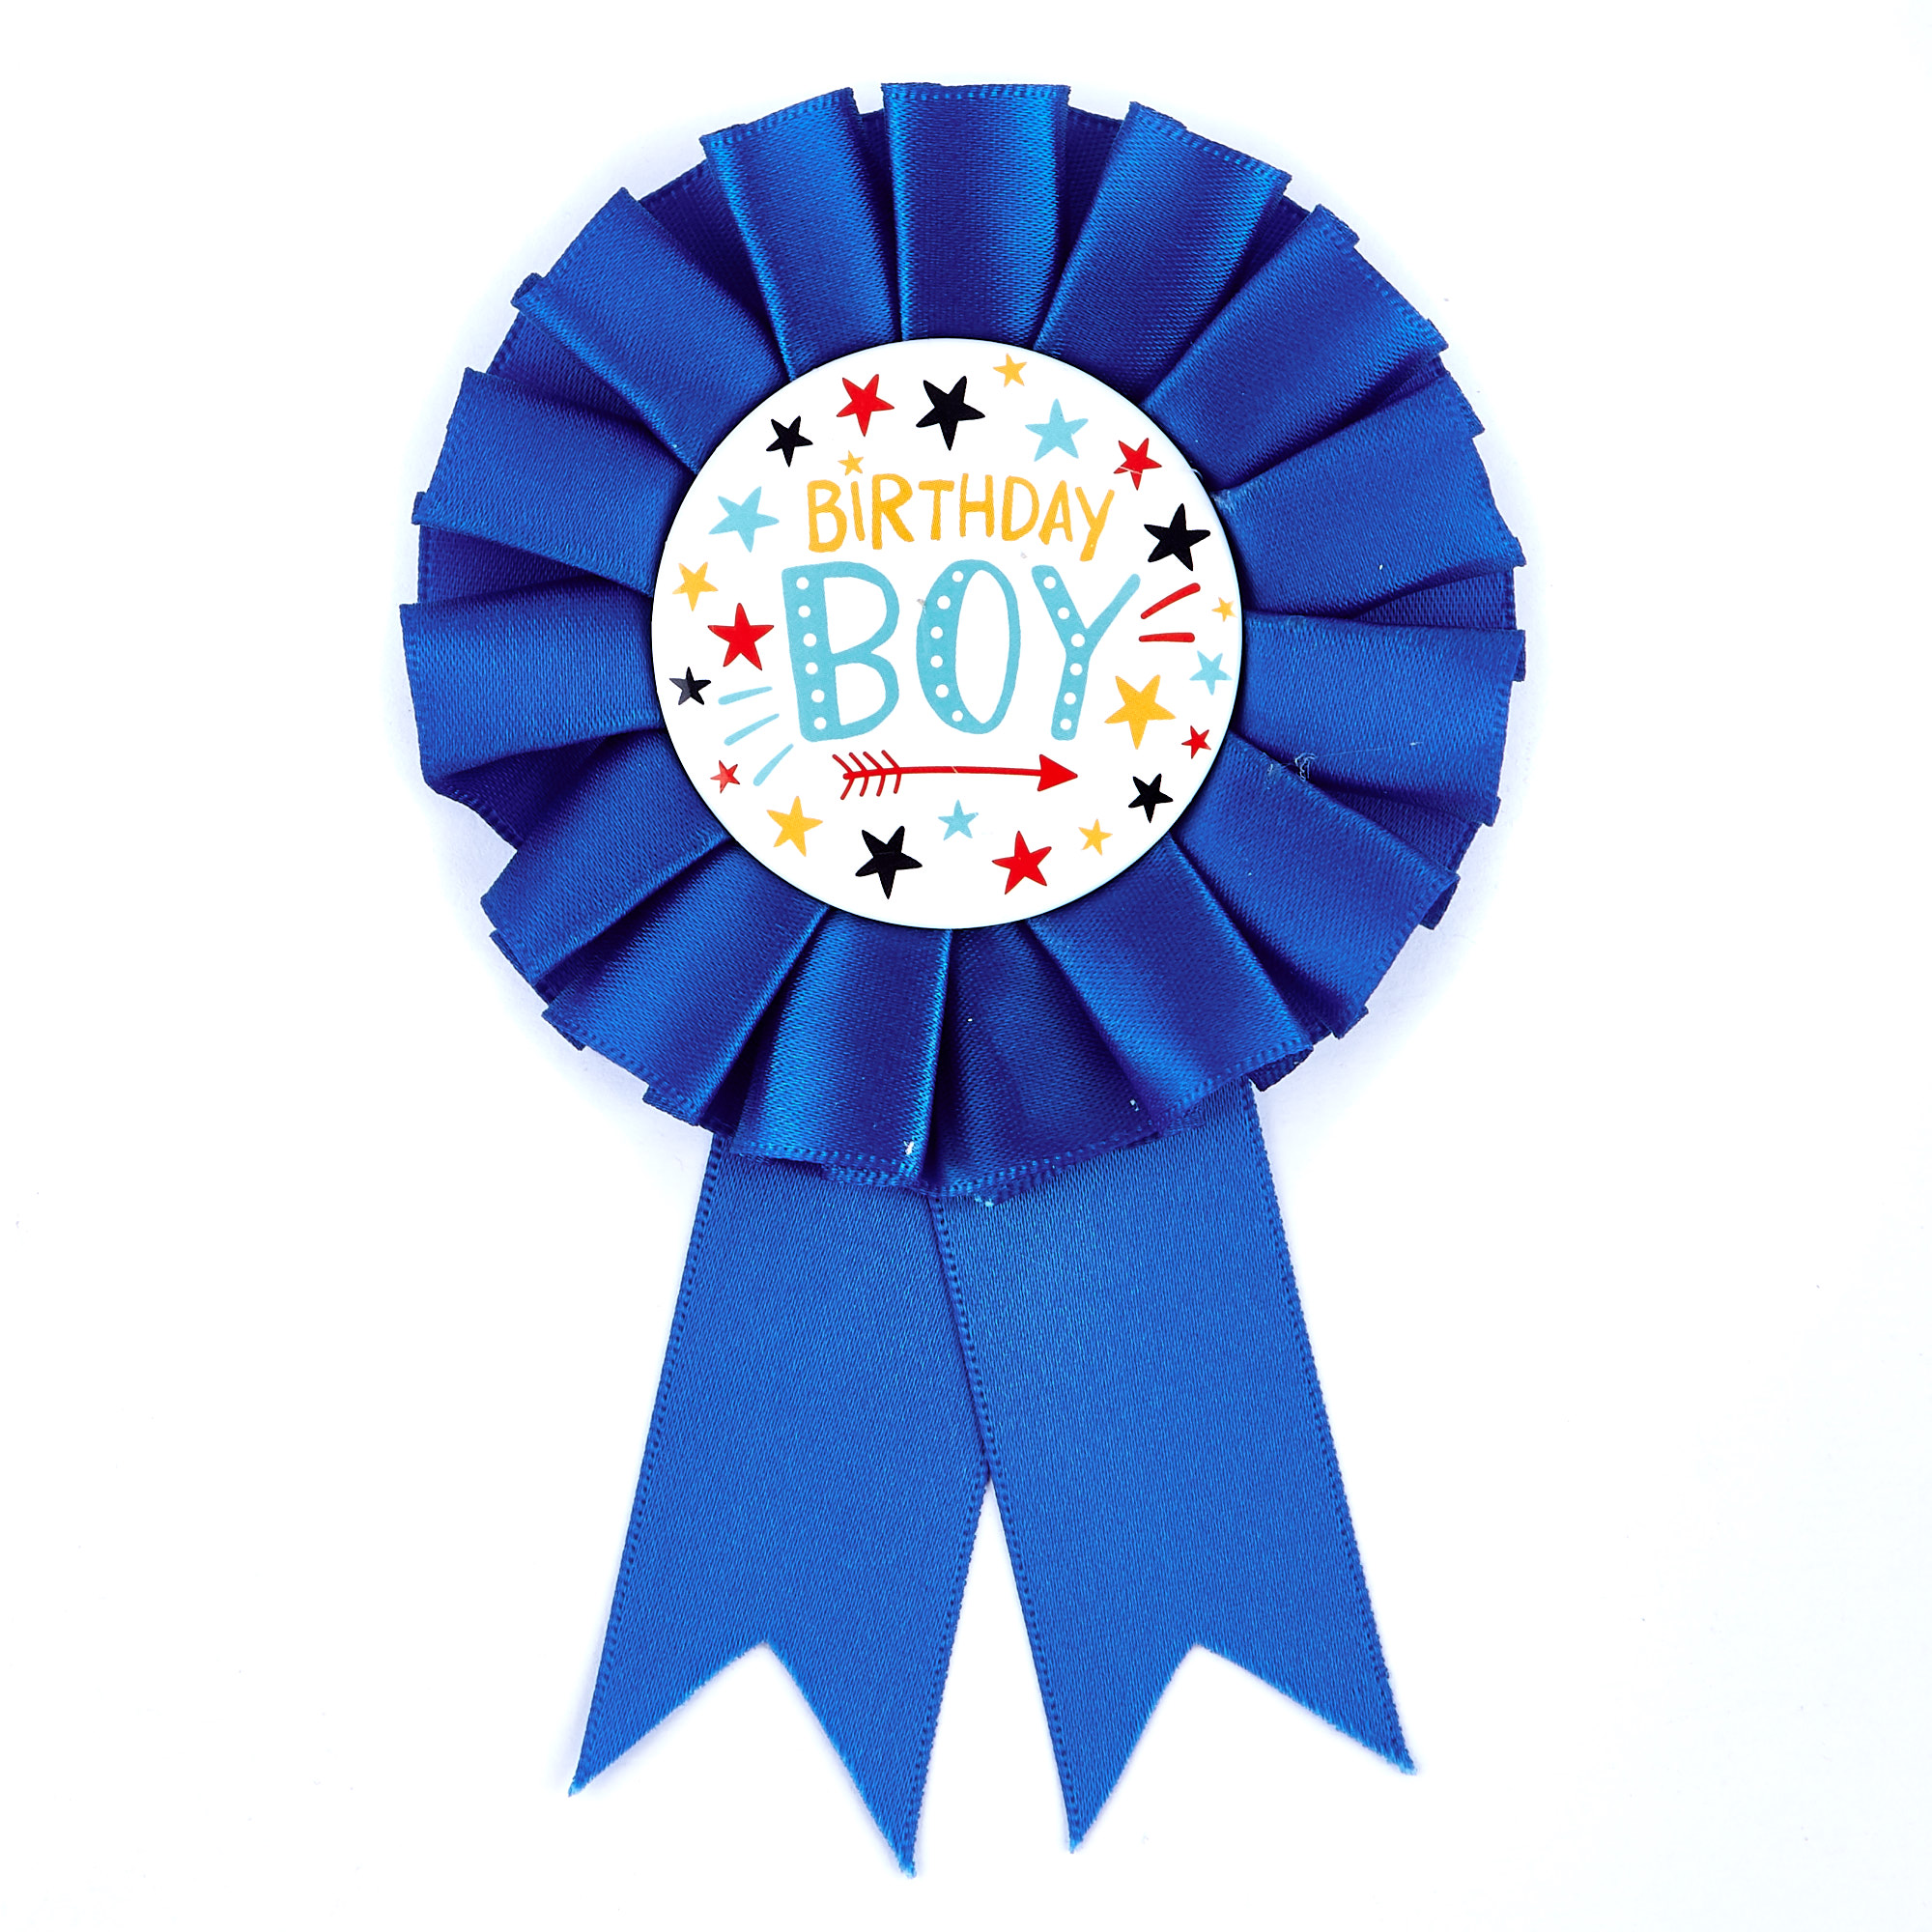 Birthday Boy Blue Rosette Badge 